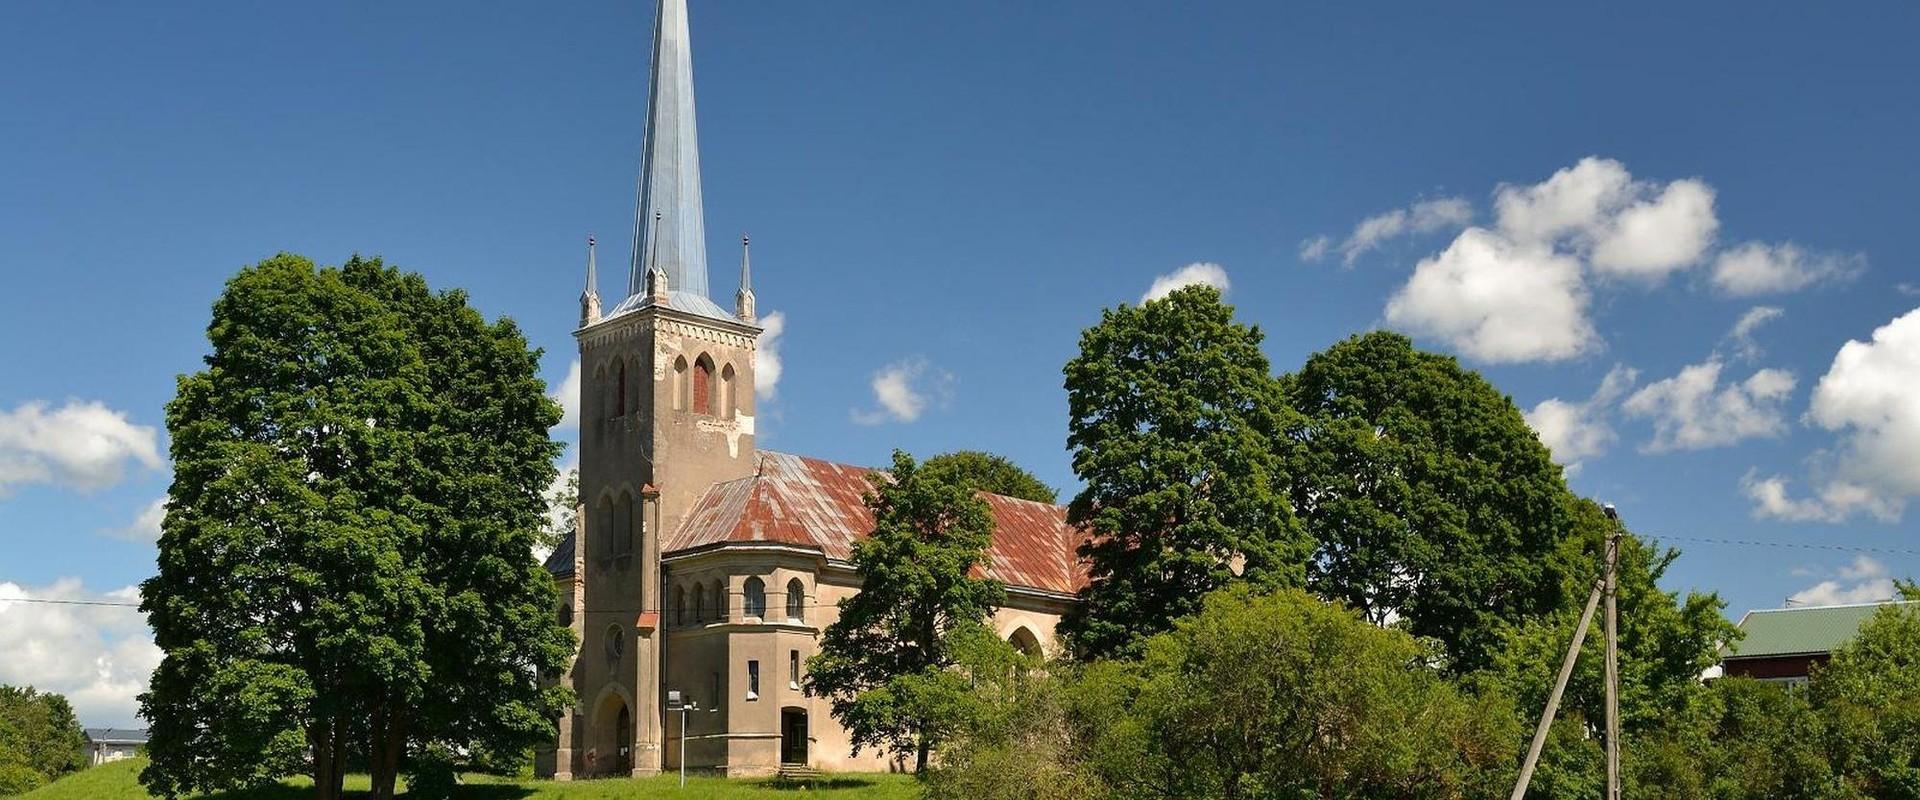 Rõngu St Michael’s Church of the Estonian Evangelical Lutheran Church